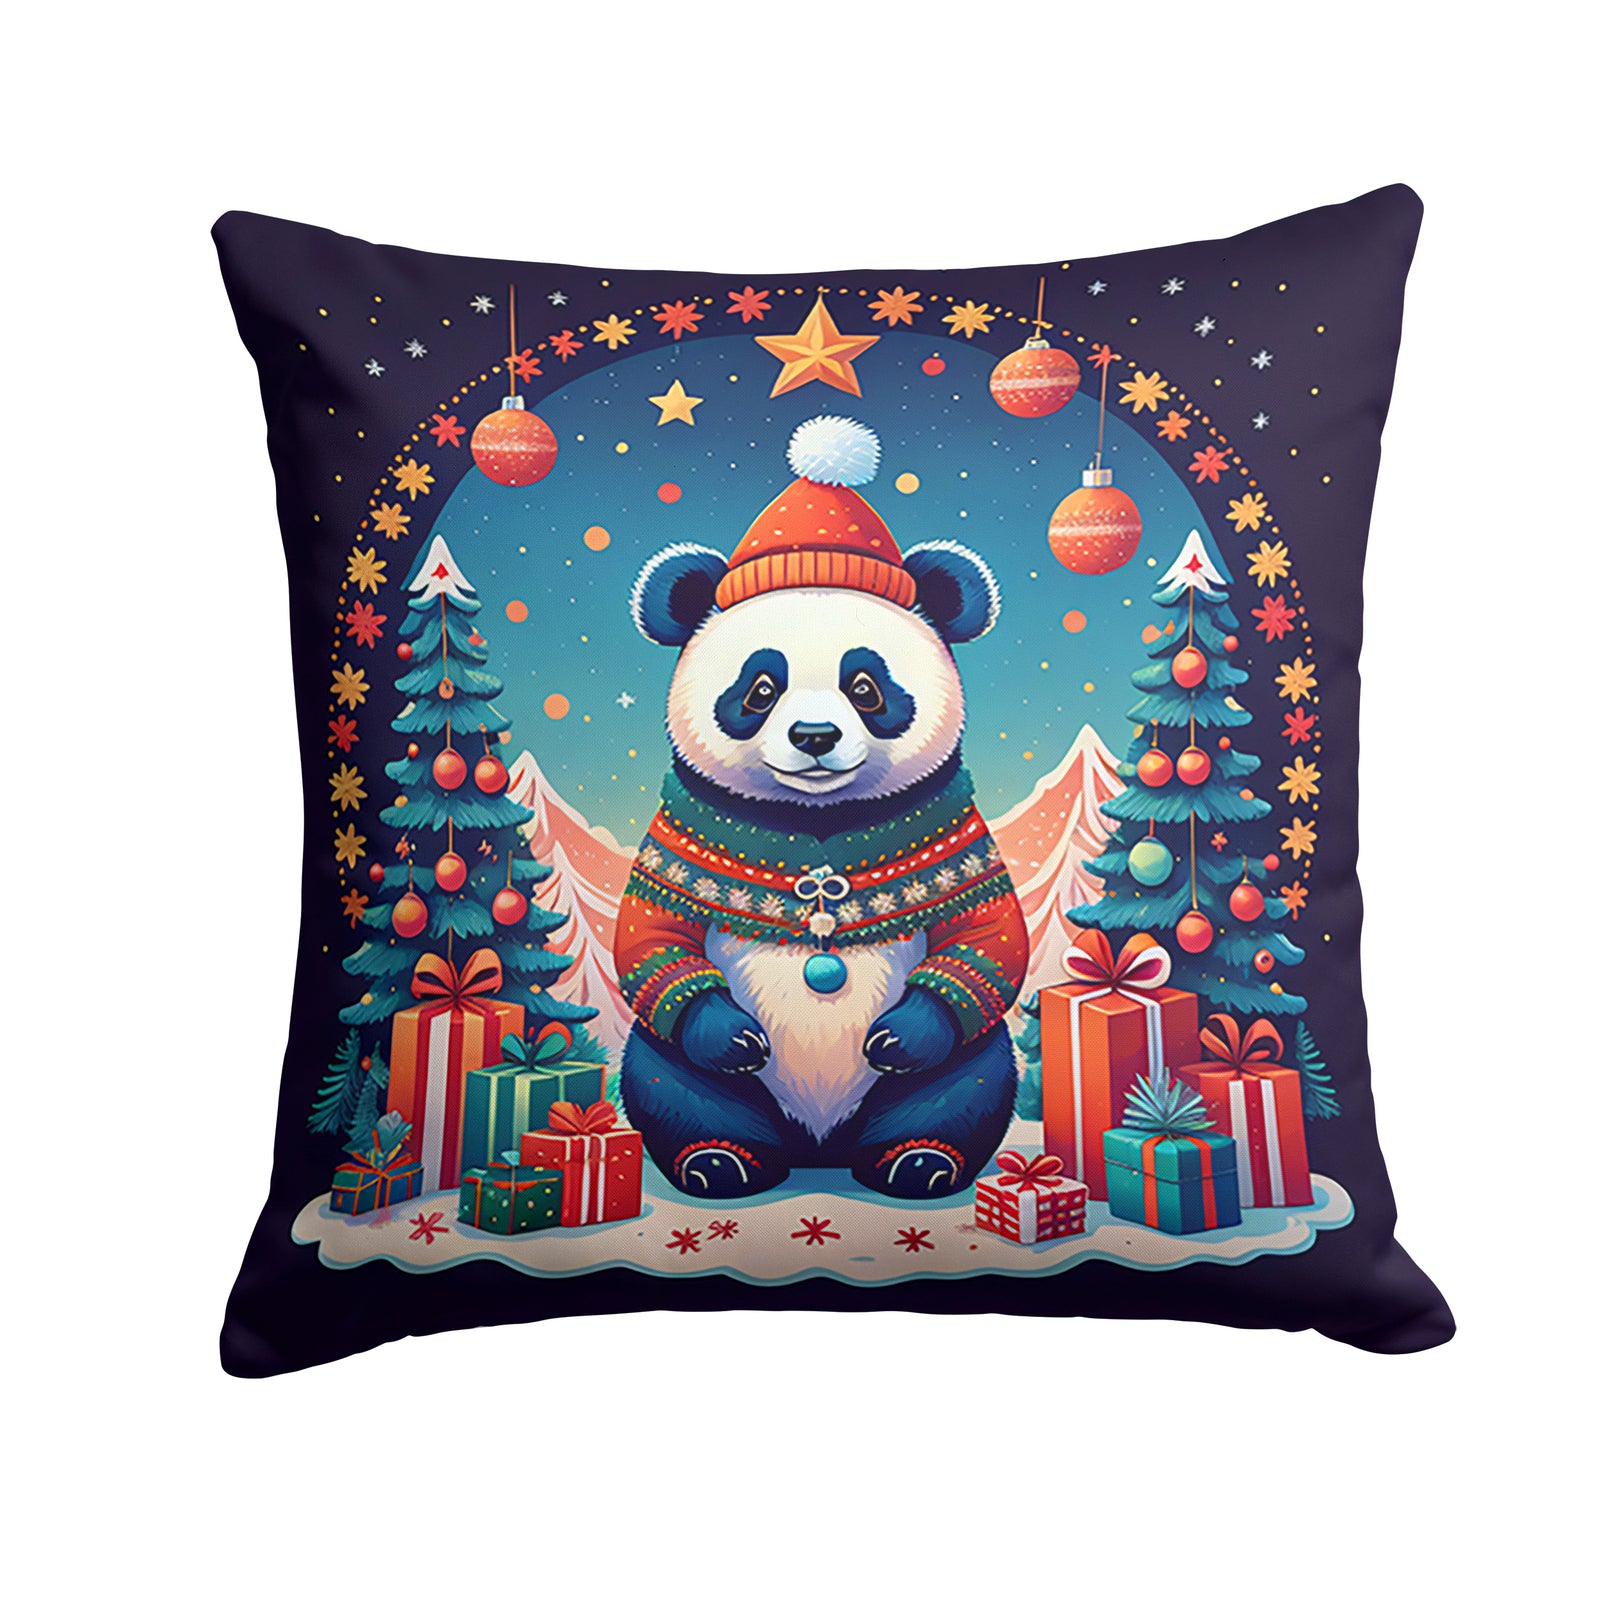 Buy this Panda Christmas Fabric Decorative Pillow